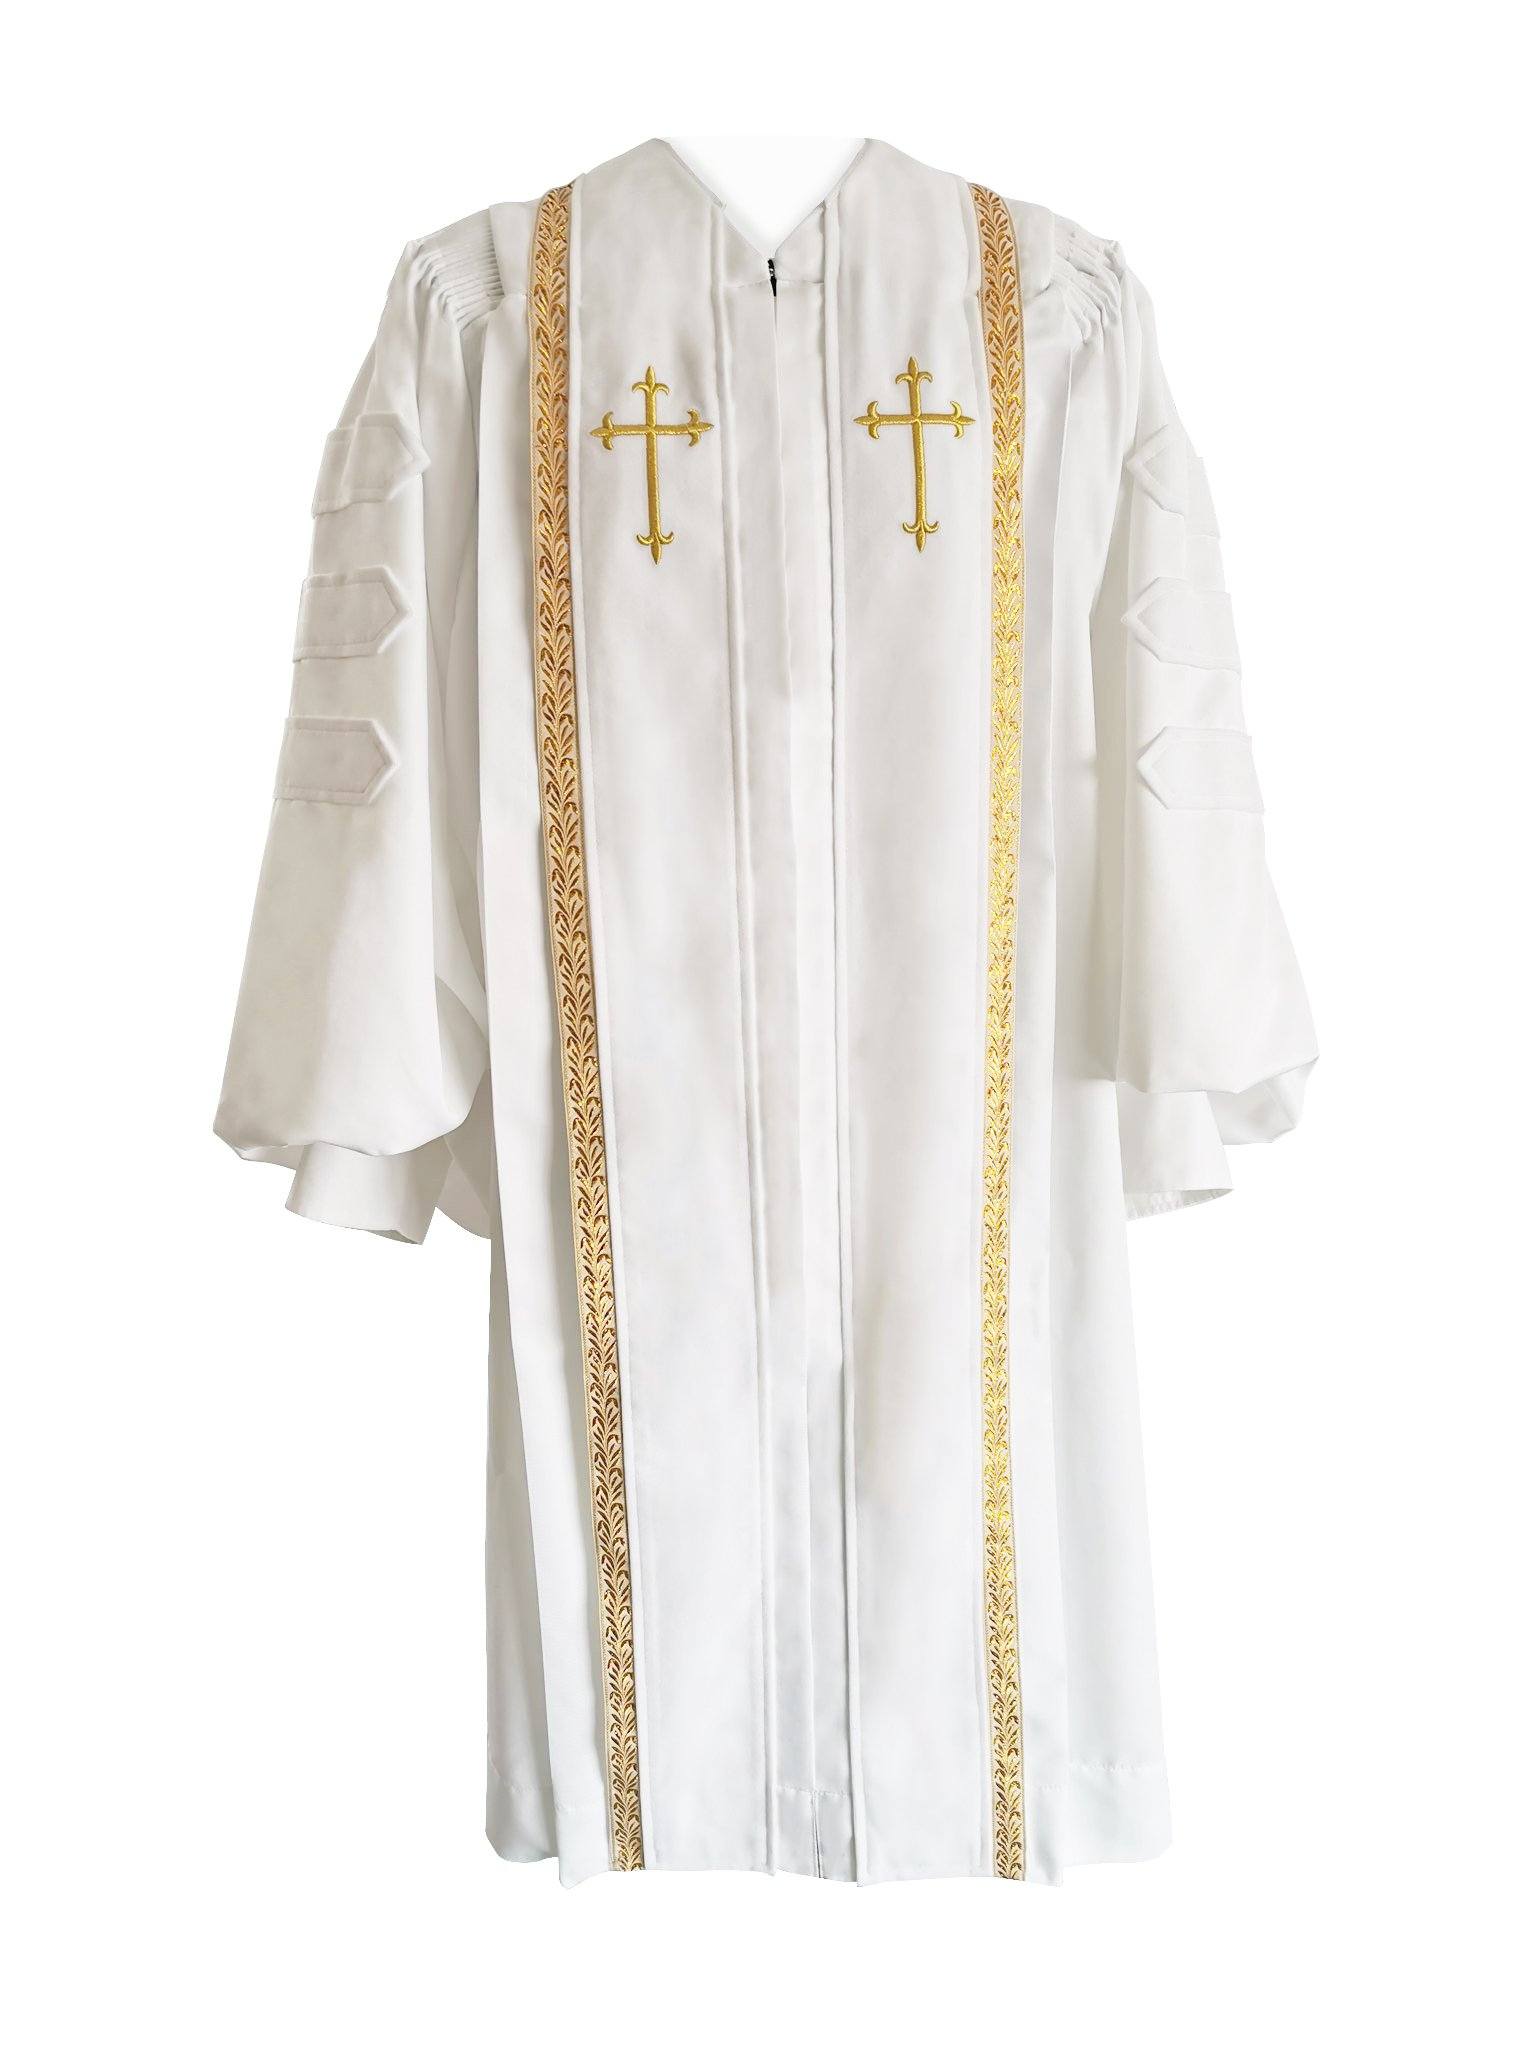 White Bishop Clergy Robe - Churchings